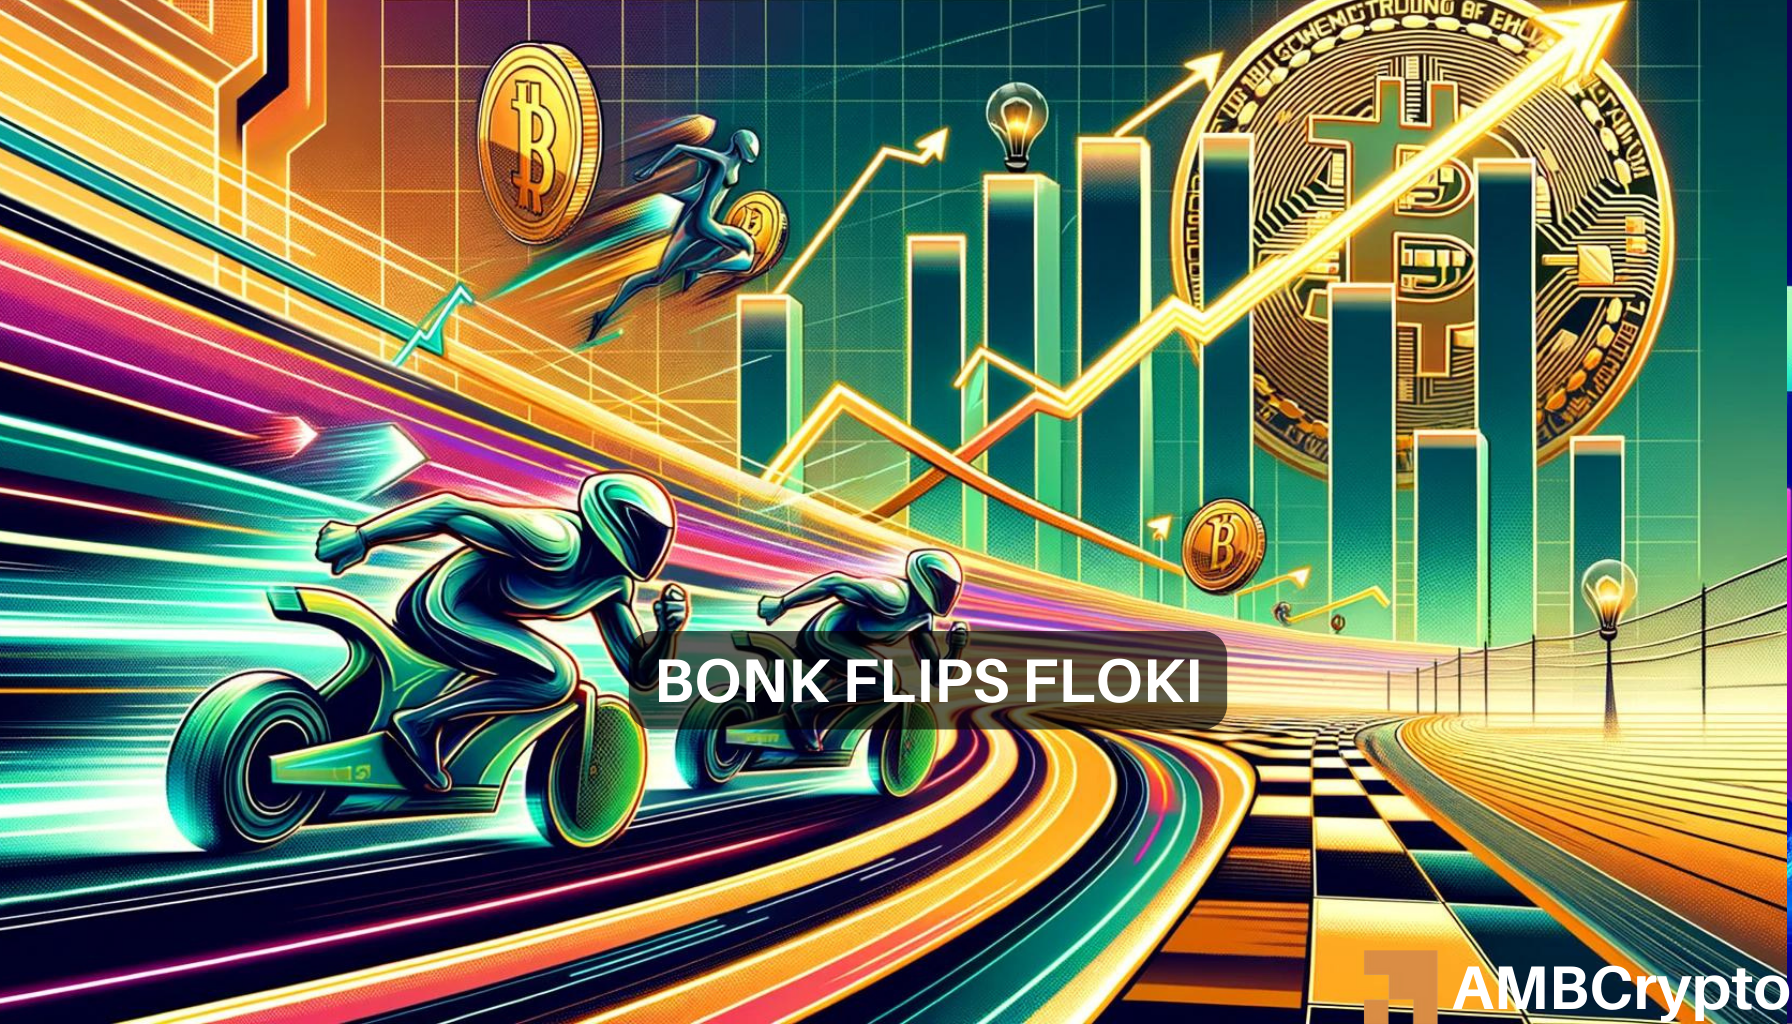 BONK flips FLOKI, rises 103% – More gains coming?